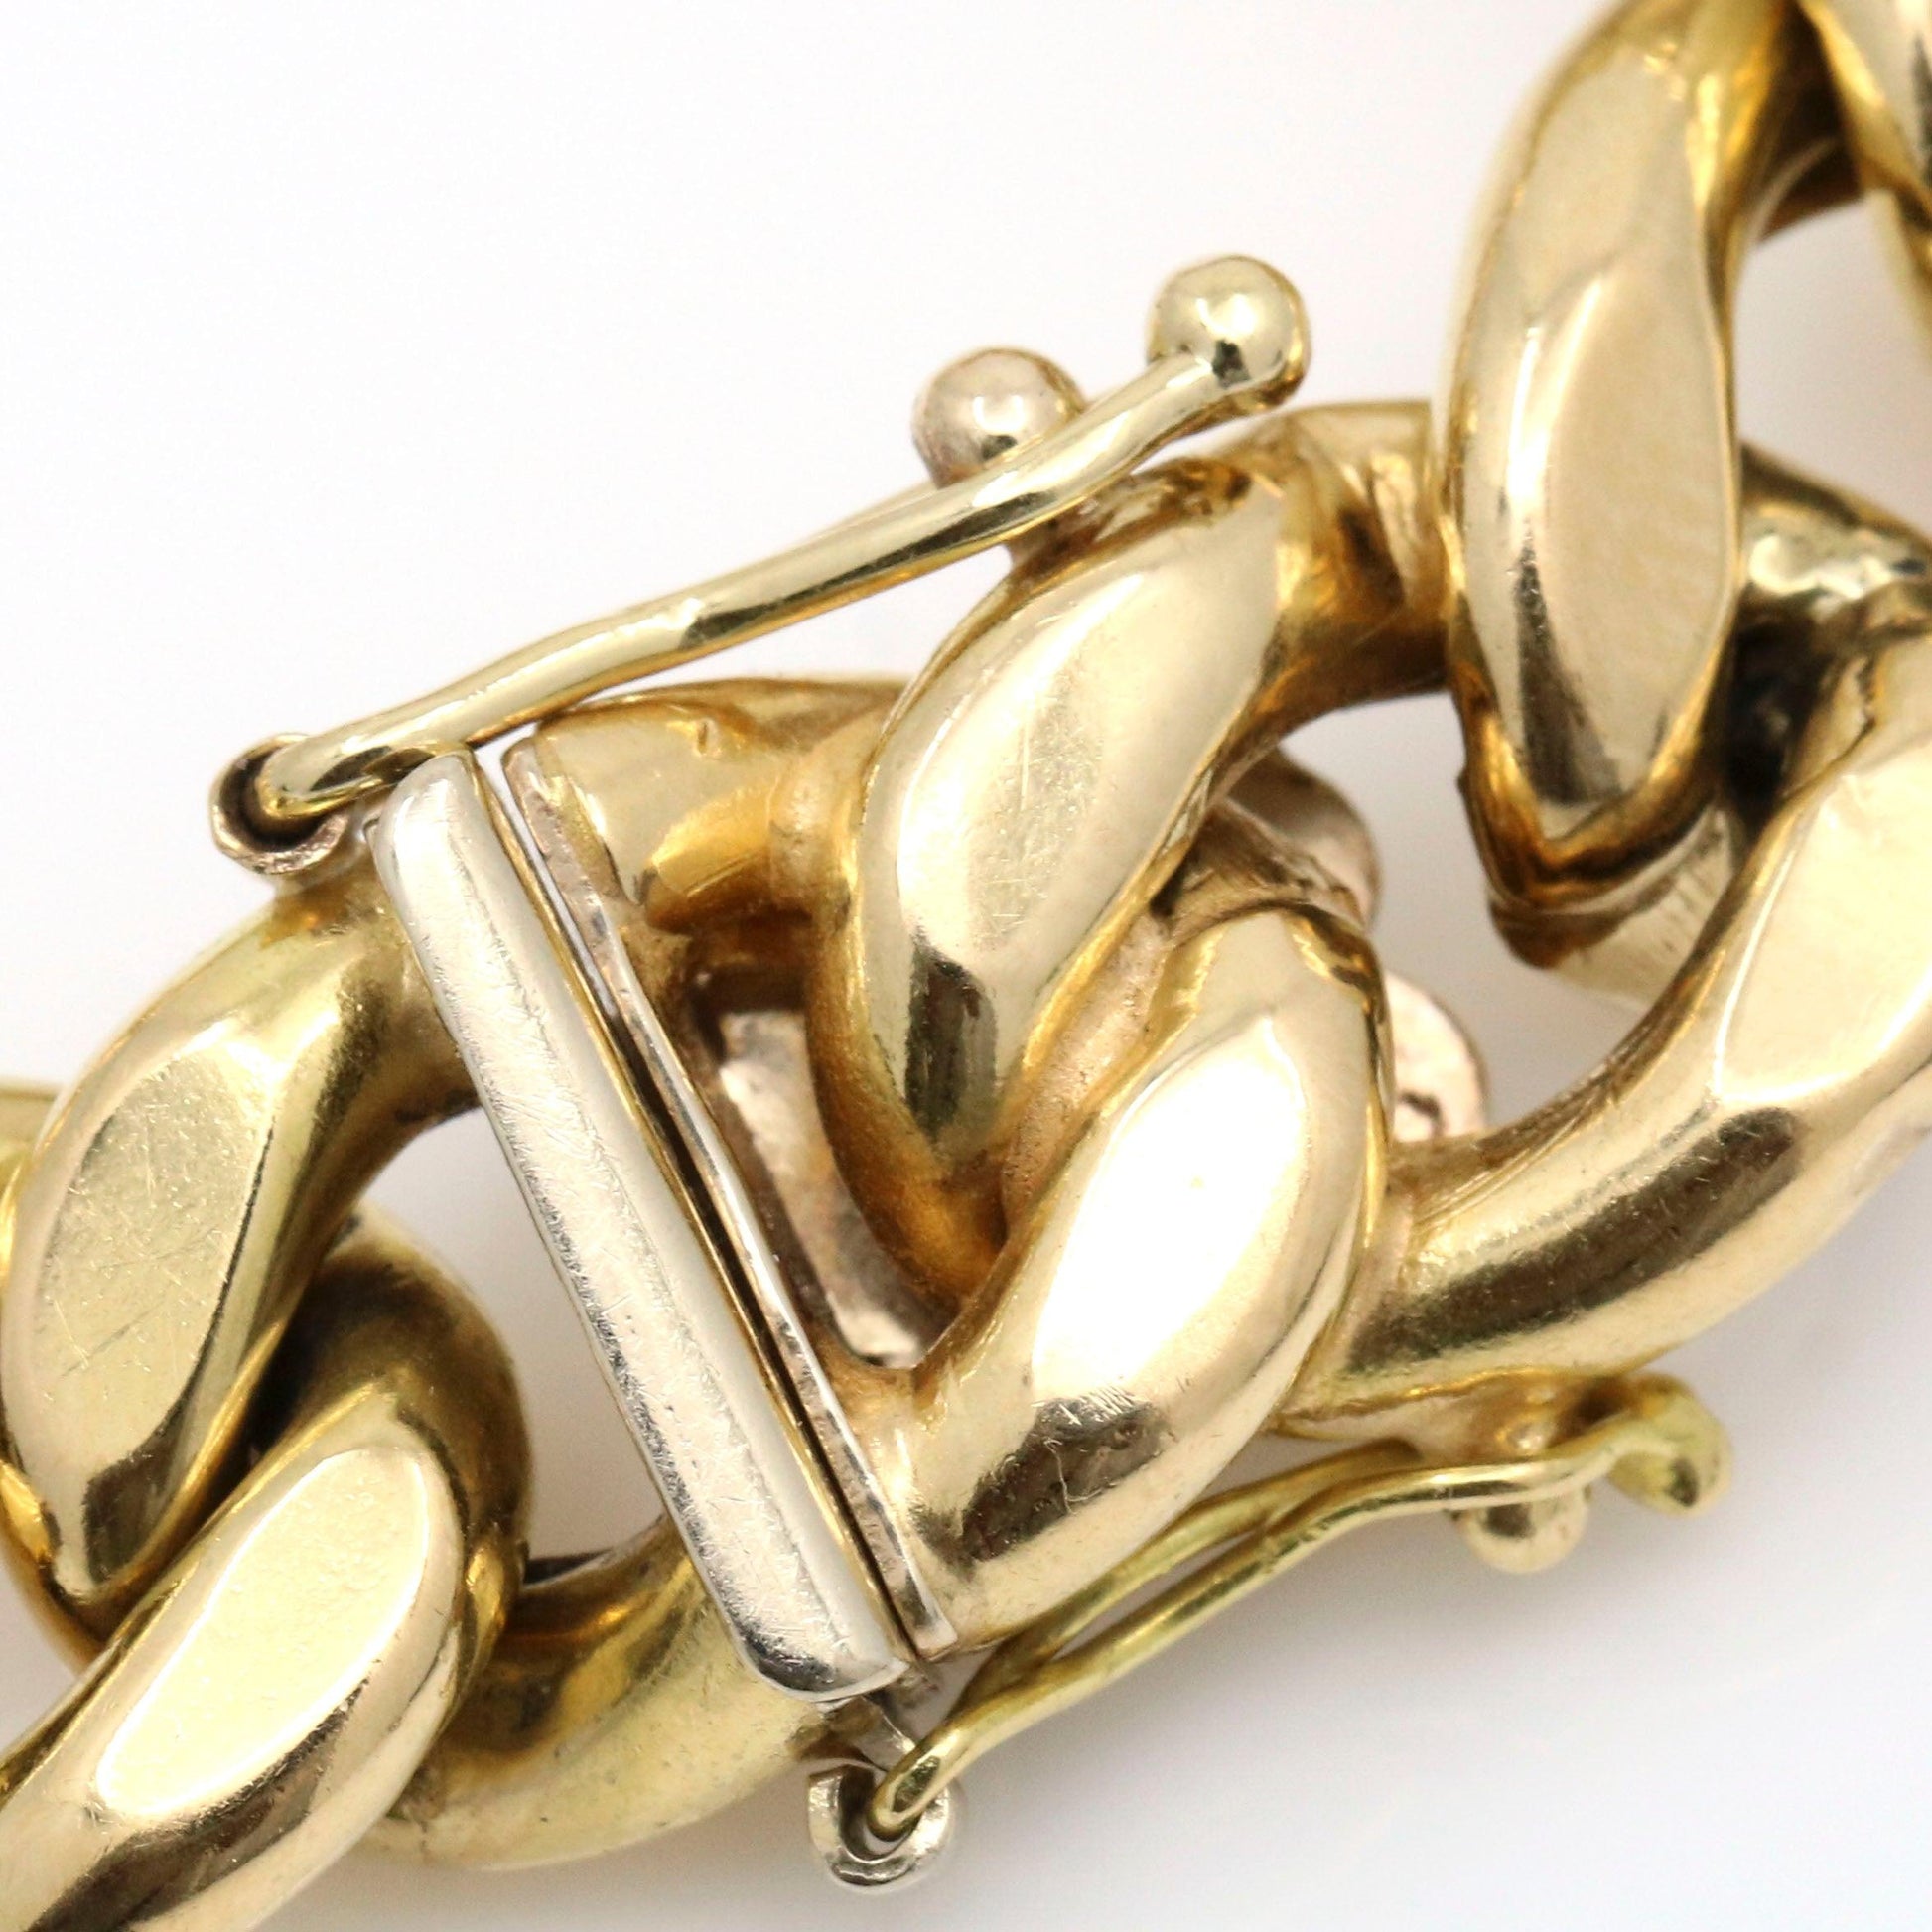 Women's Cuban Curved Link Statement Bracelet in 18k Yellow Gold - 31 Jewels Inc.